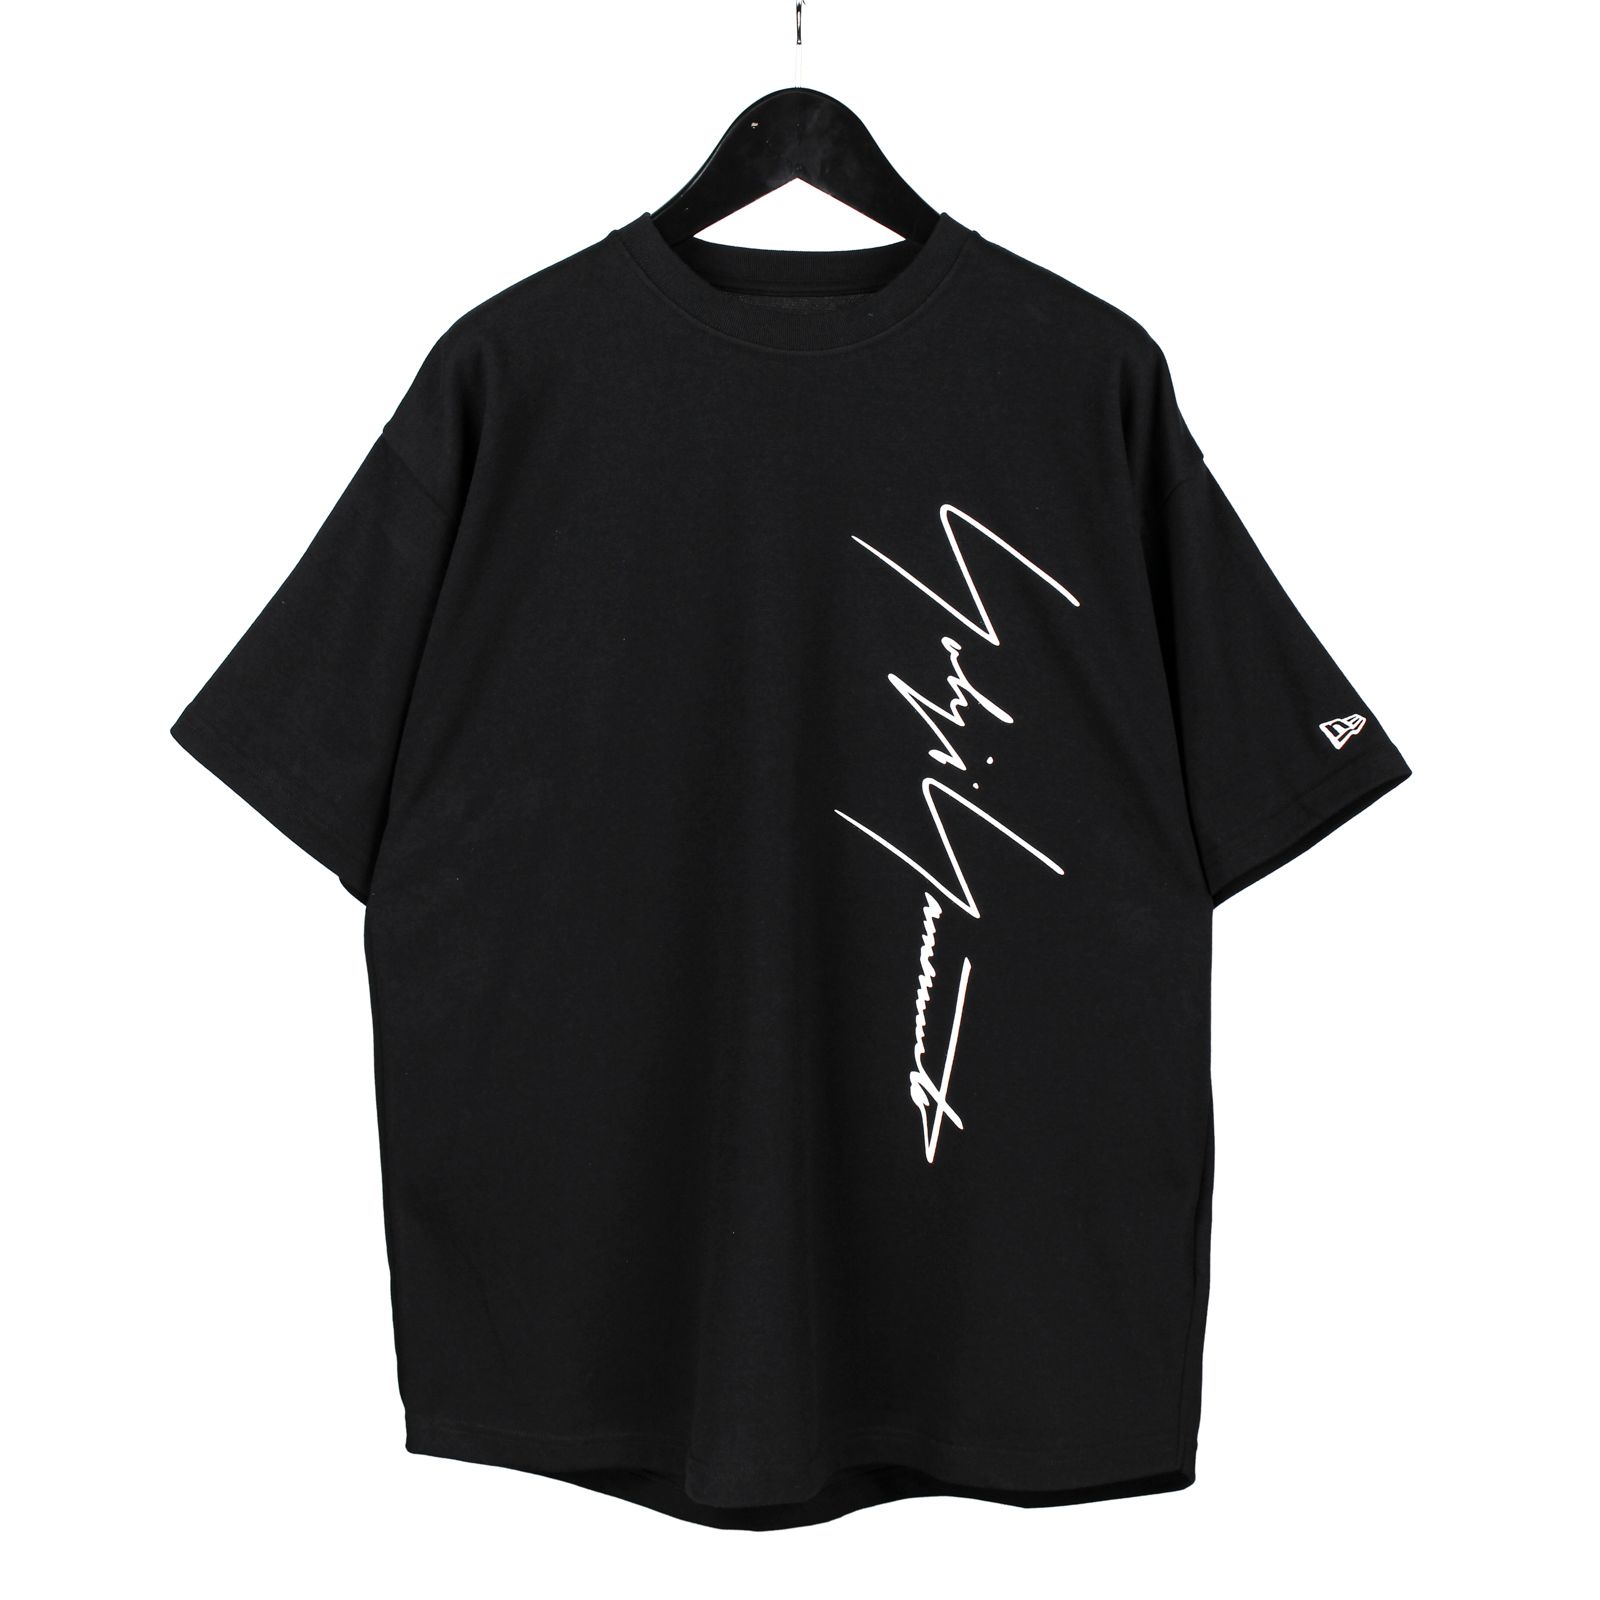 Yohji Yamamoto/New era Tシャツ